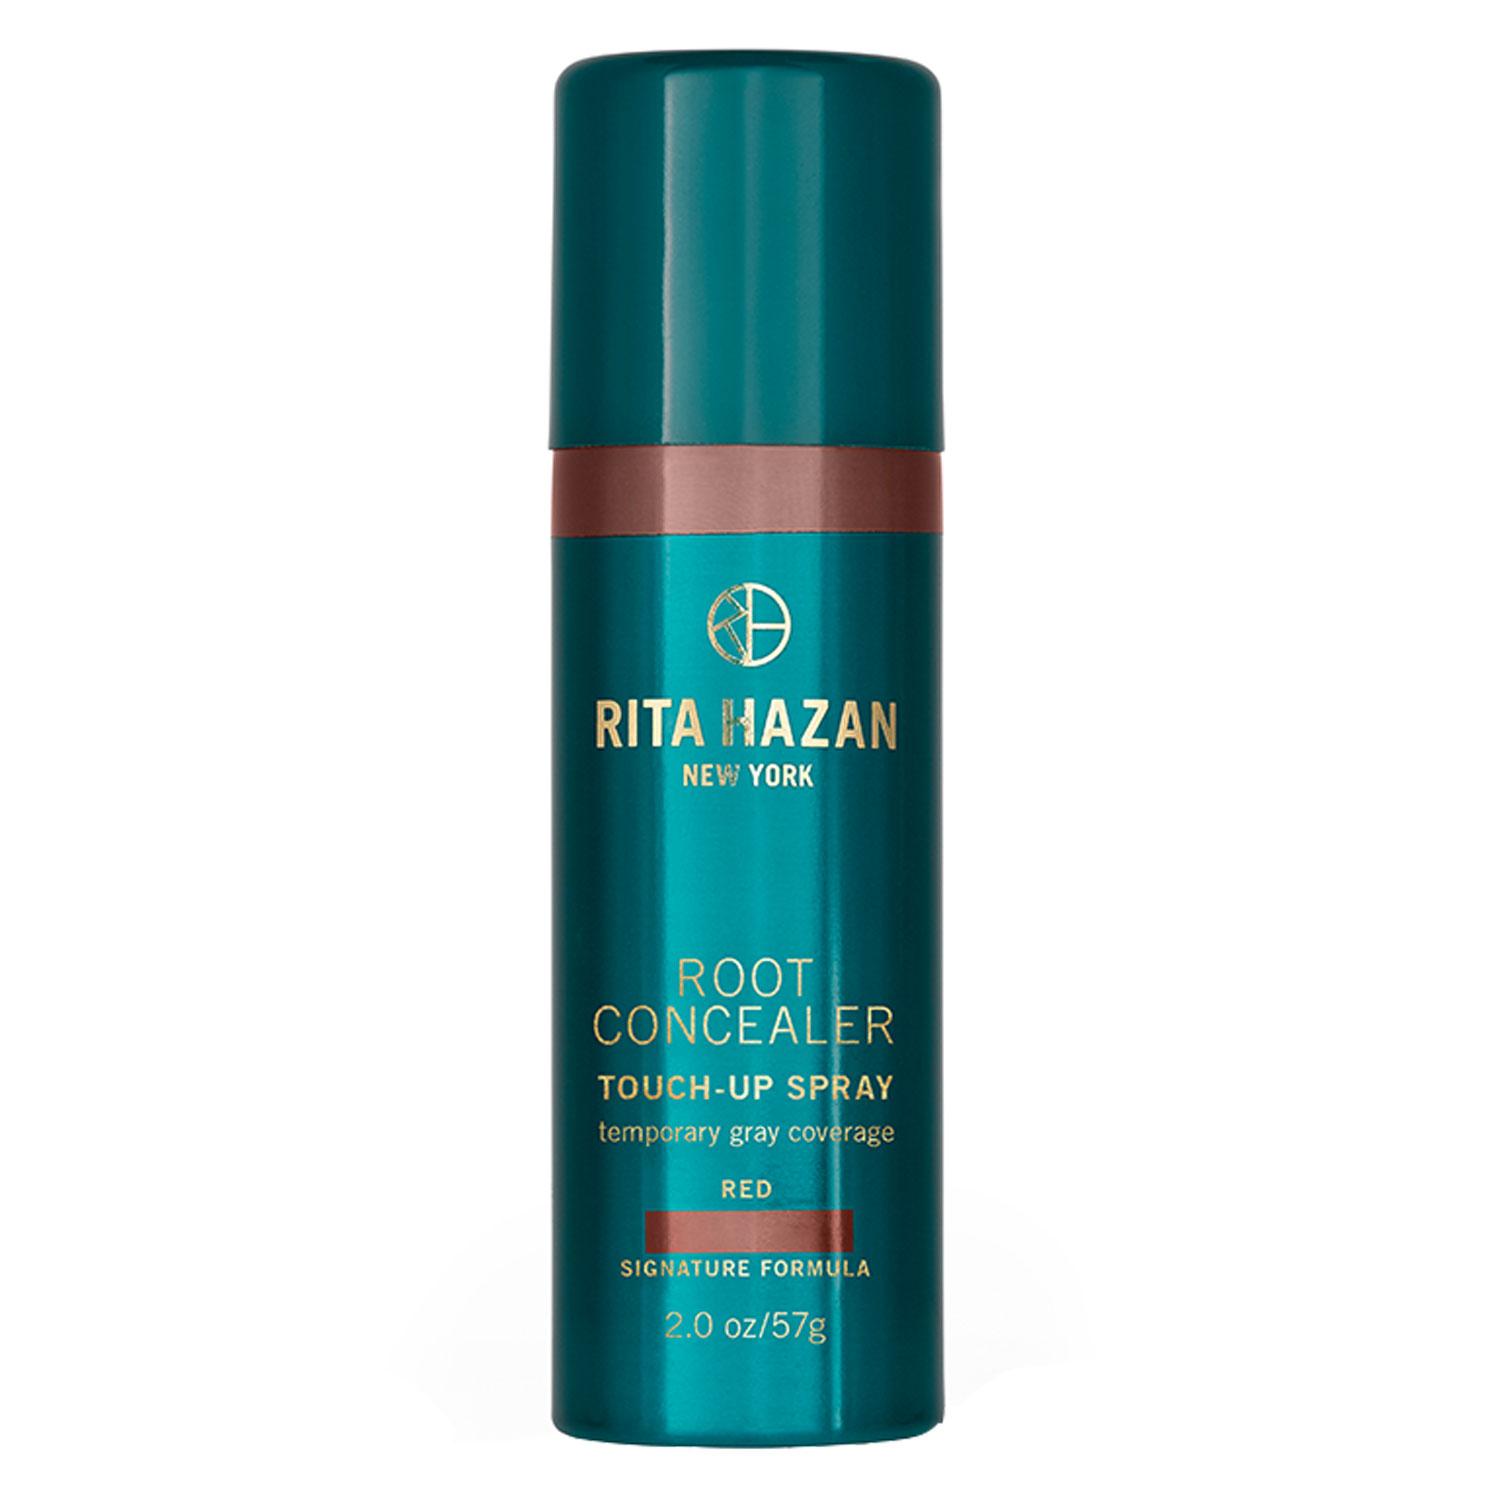 Rita Hazan New York - Root Concealer Touch-Up Spray Red